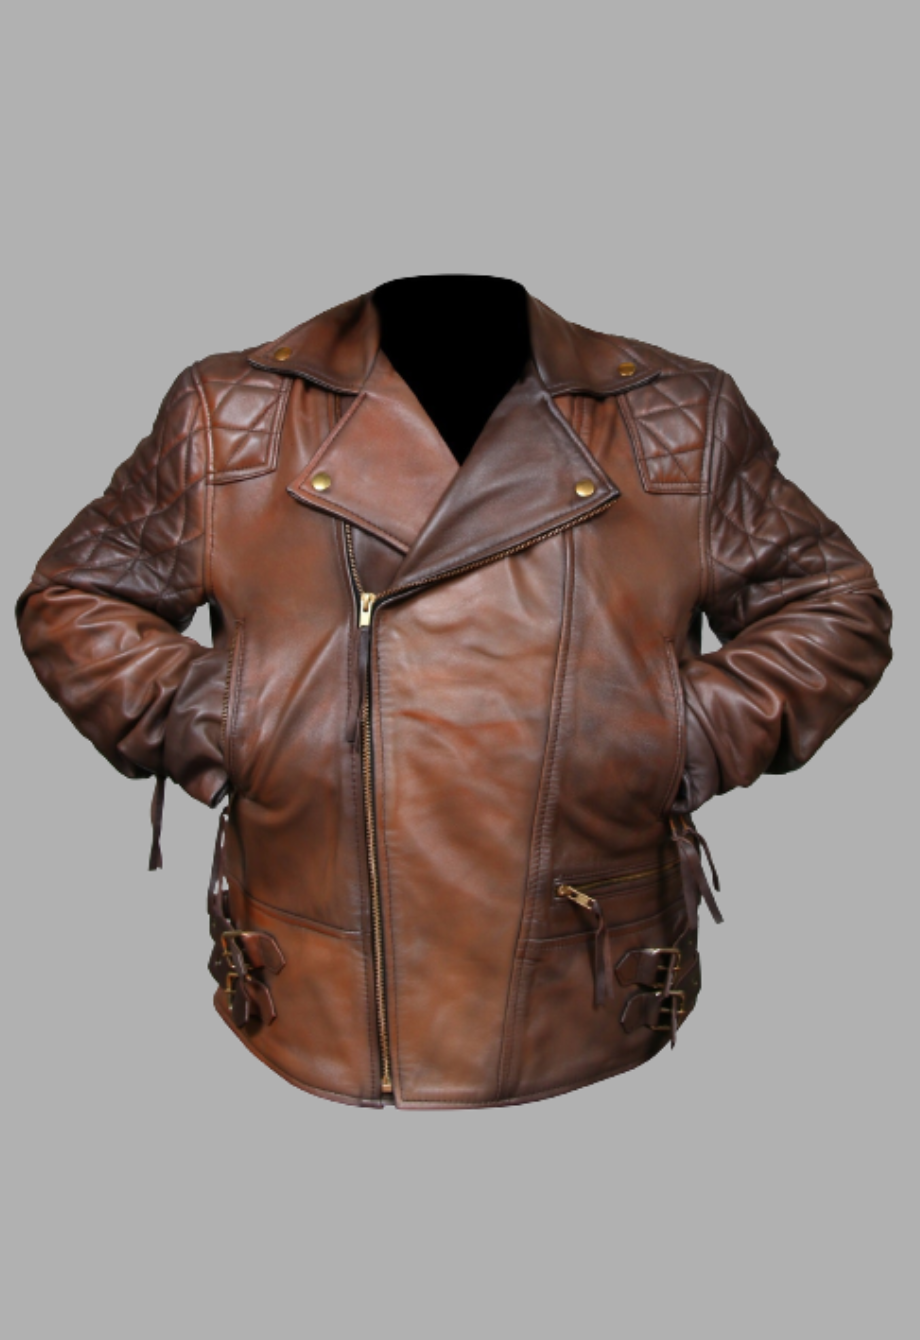 Mens Biker Distressed Brown Leather Jacket